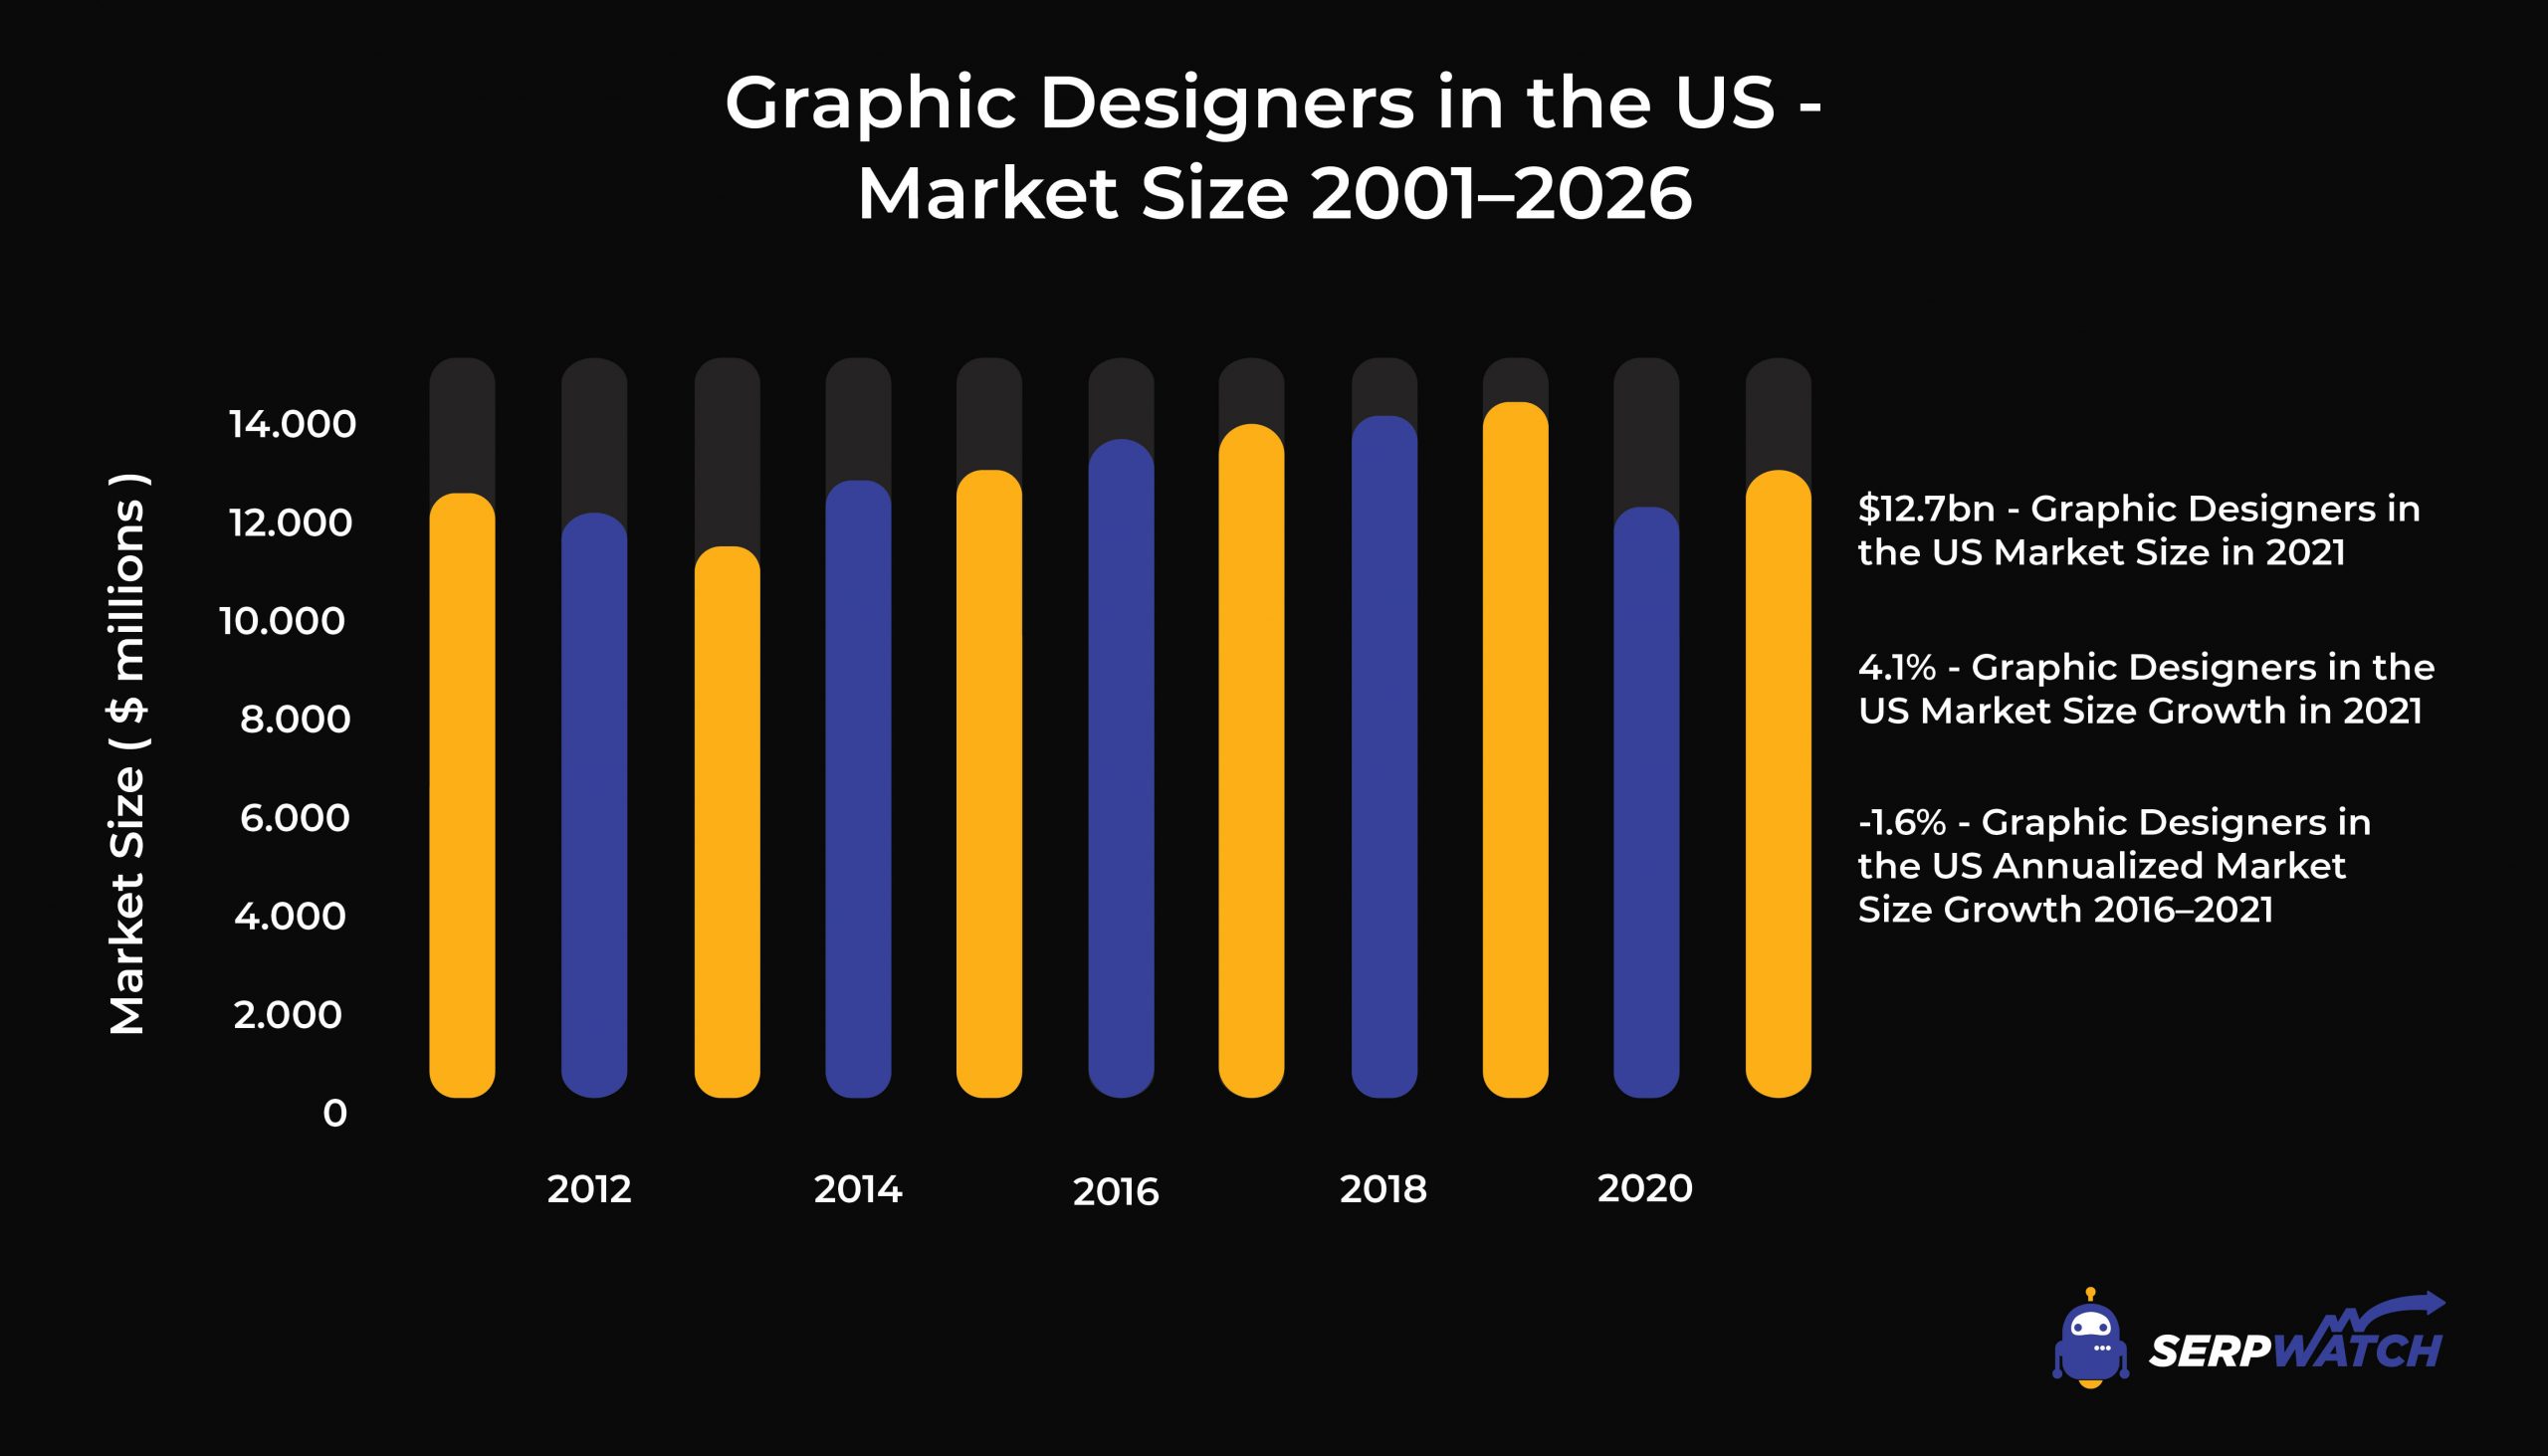 Website Design Services Market: An Overview